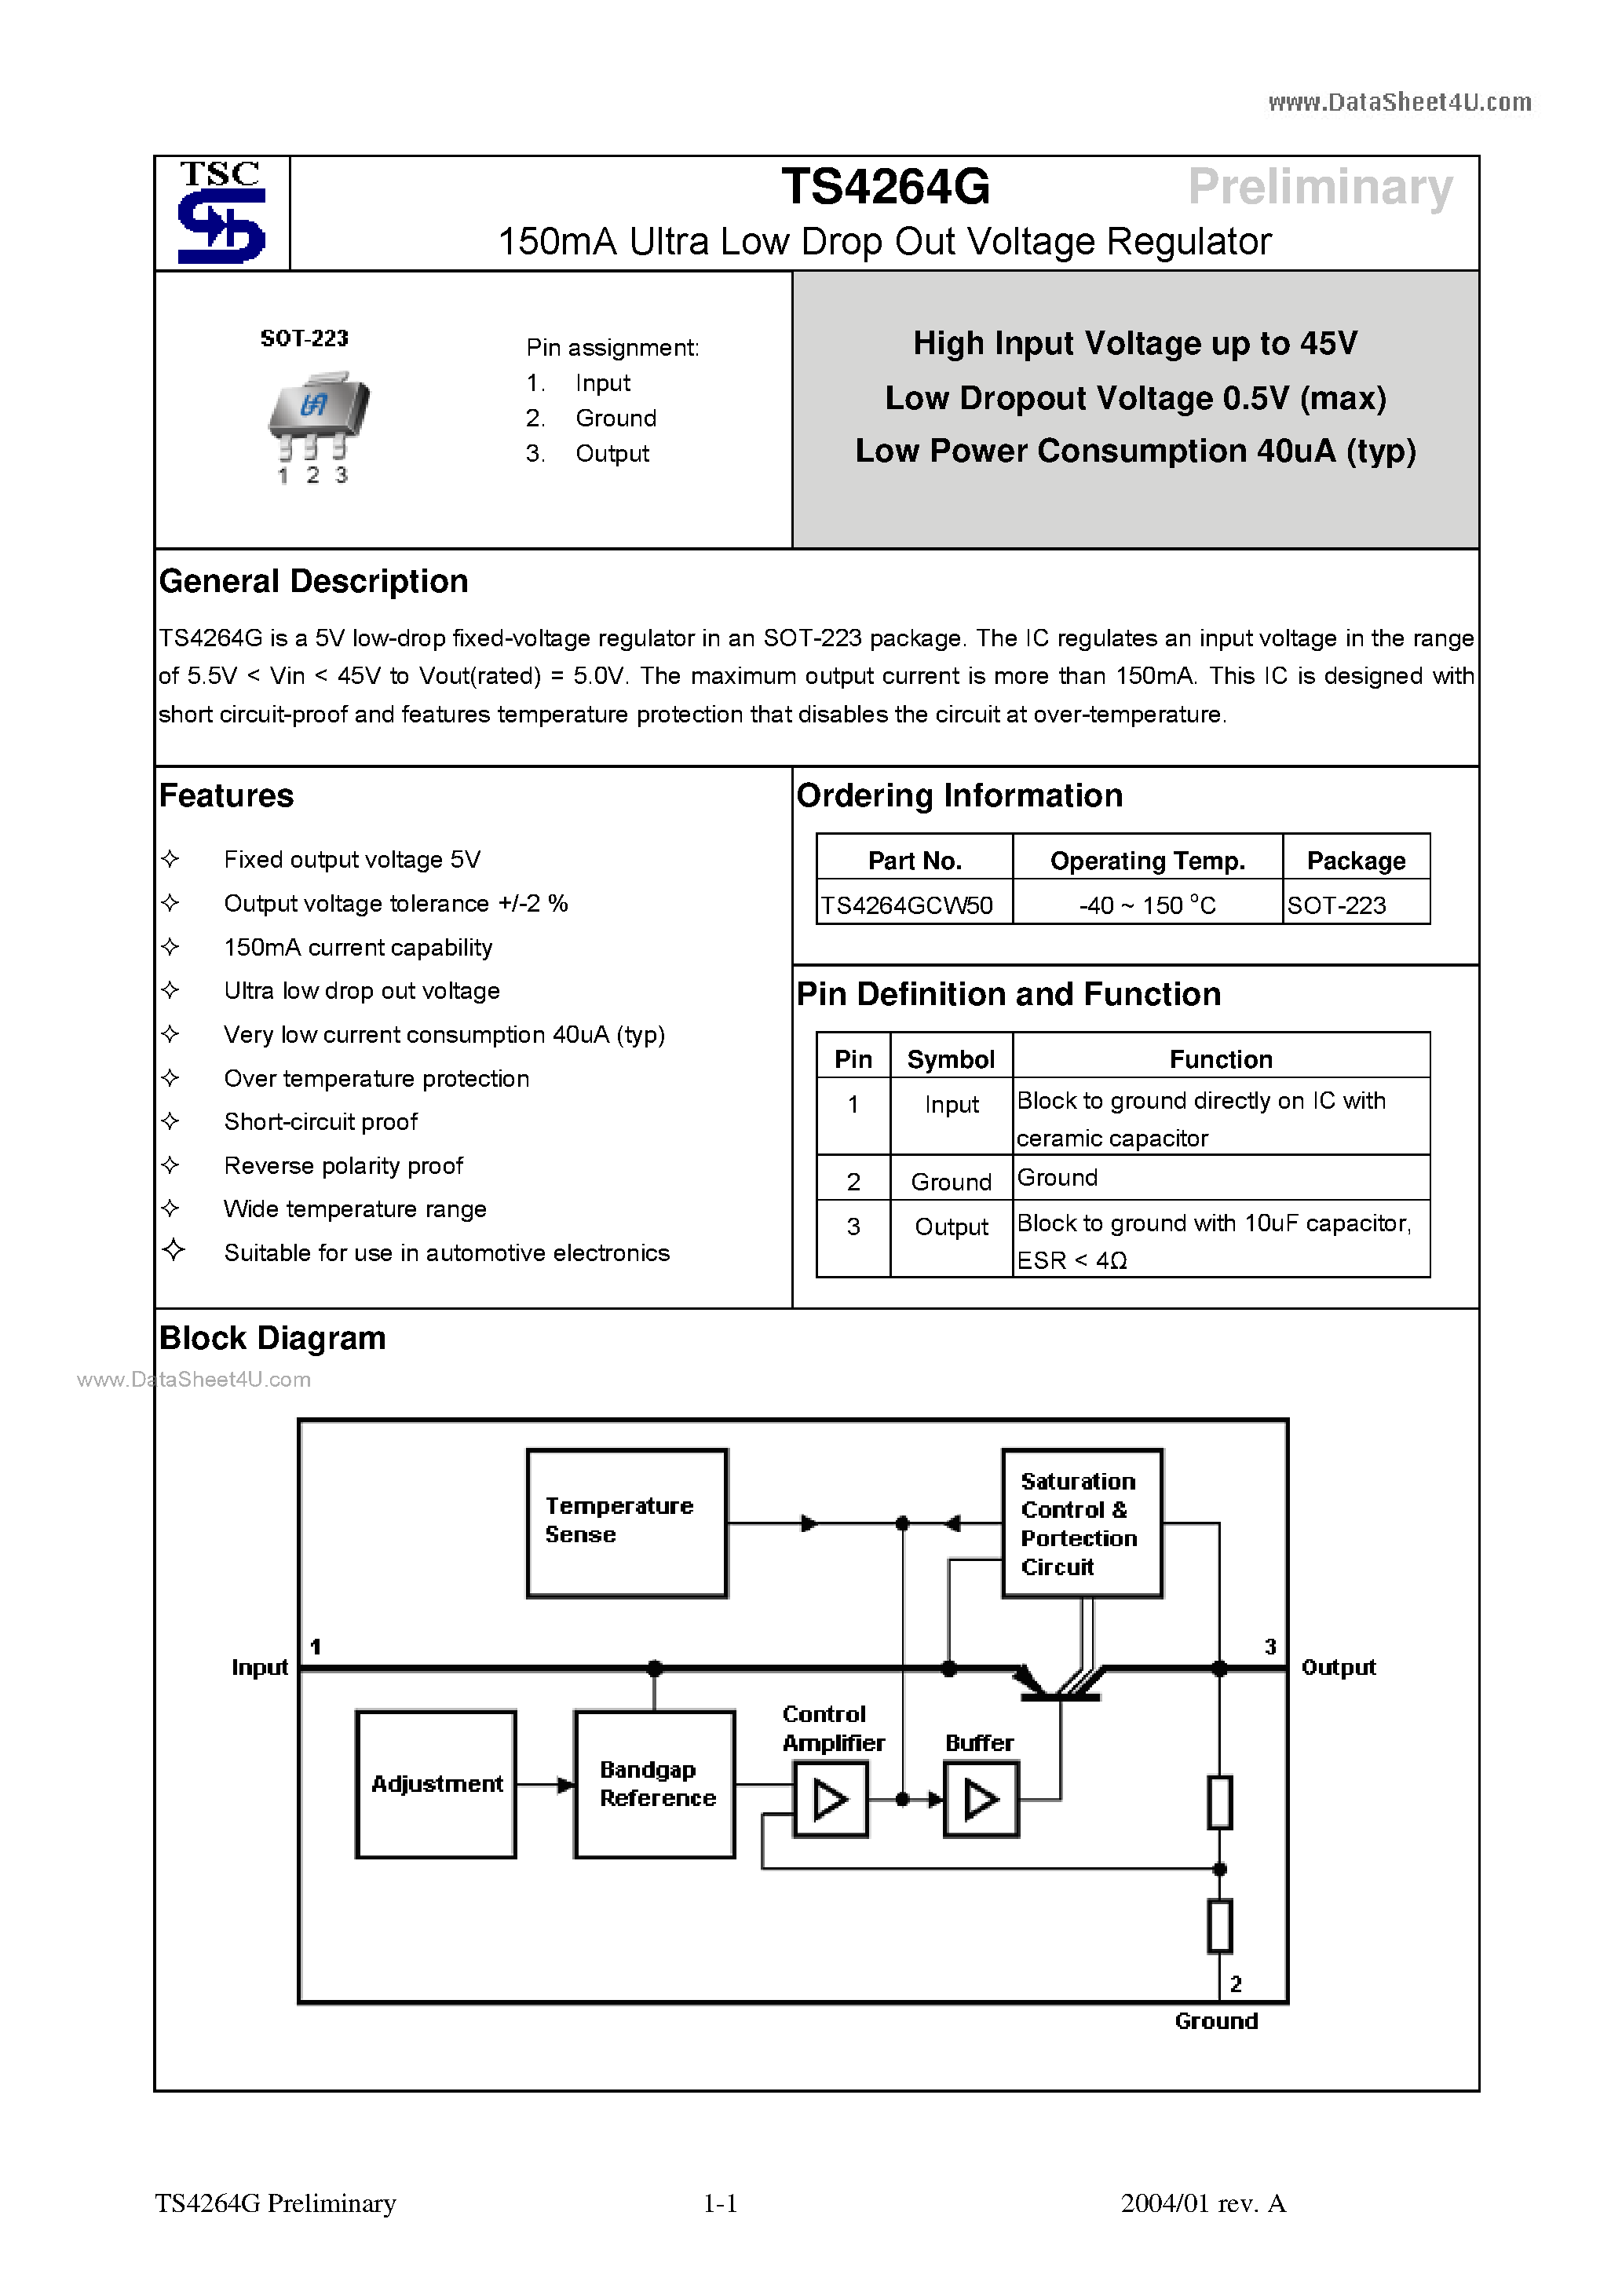 Даташит TS4264G - 150mA Ultra Low Drop Out Voltage Regulator страница 1